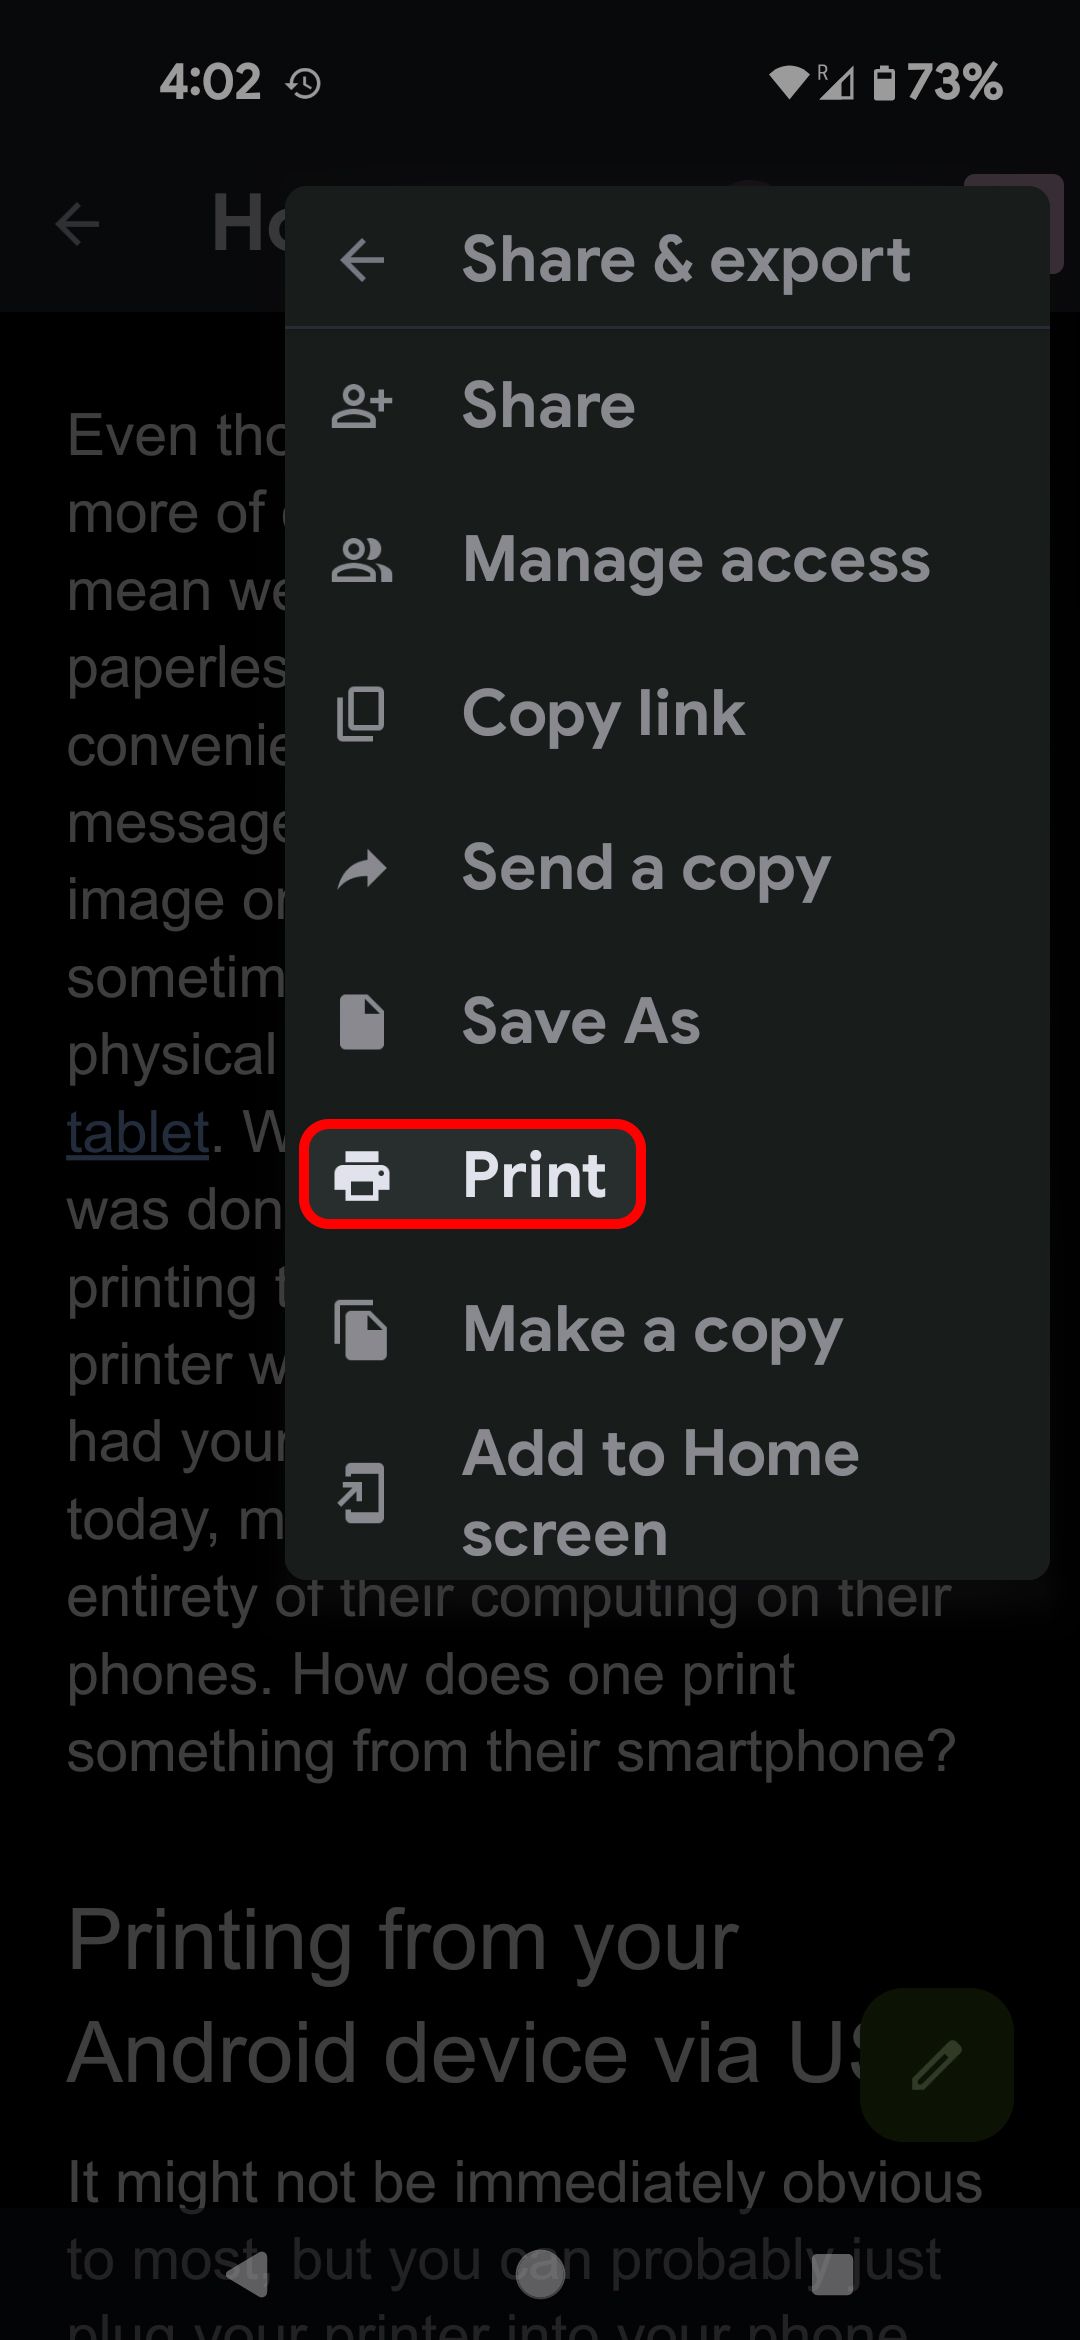 Google Docs Share & export menu highlighting the Print option